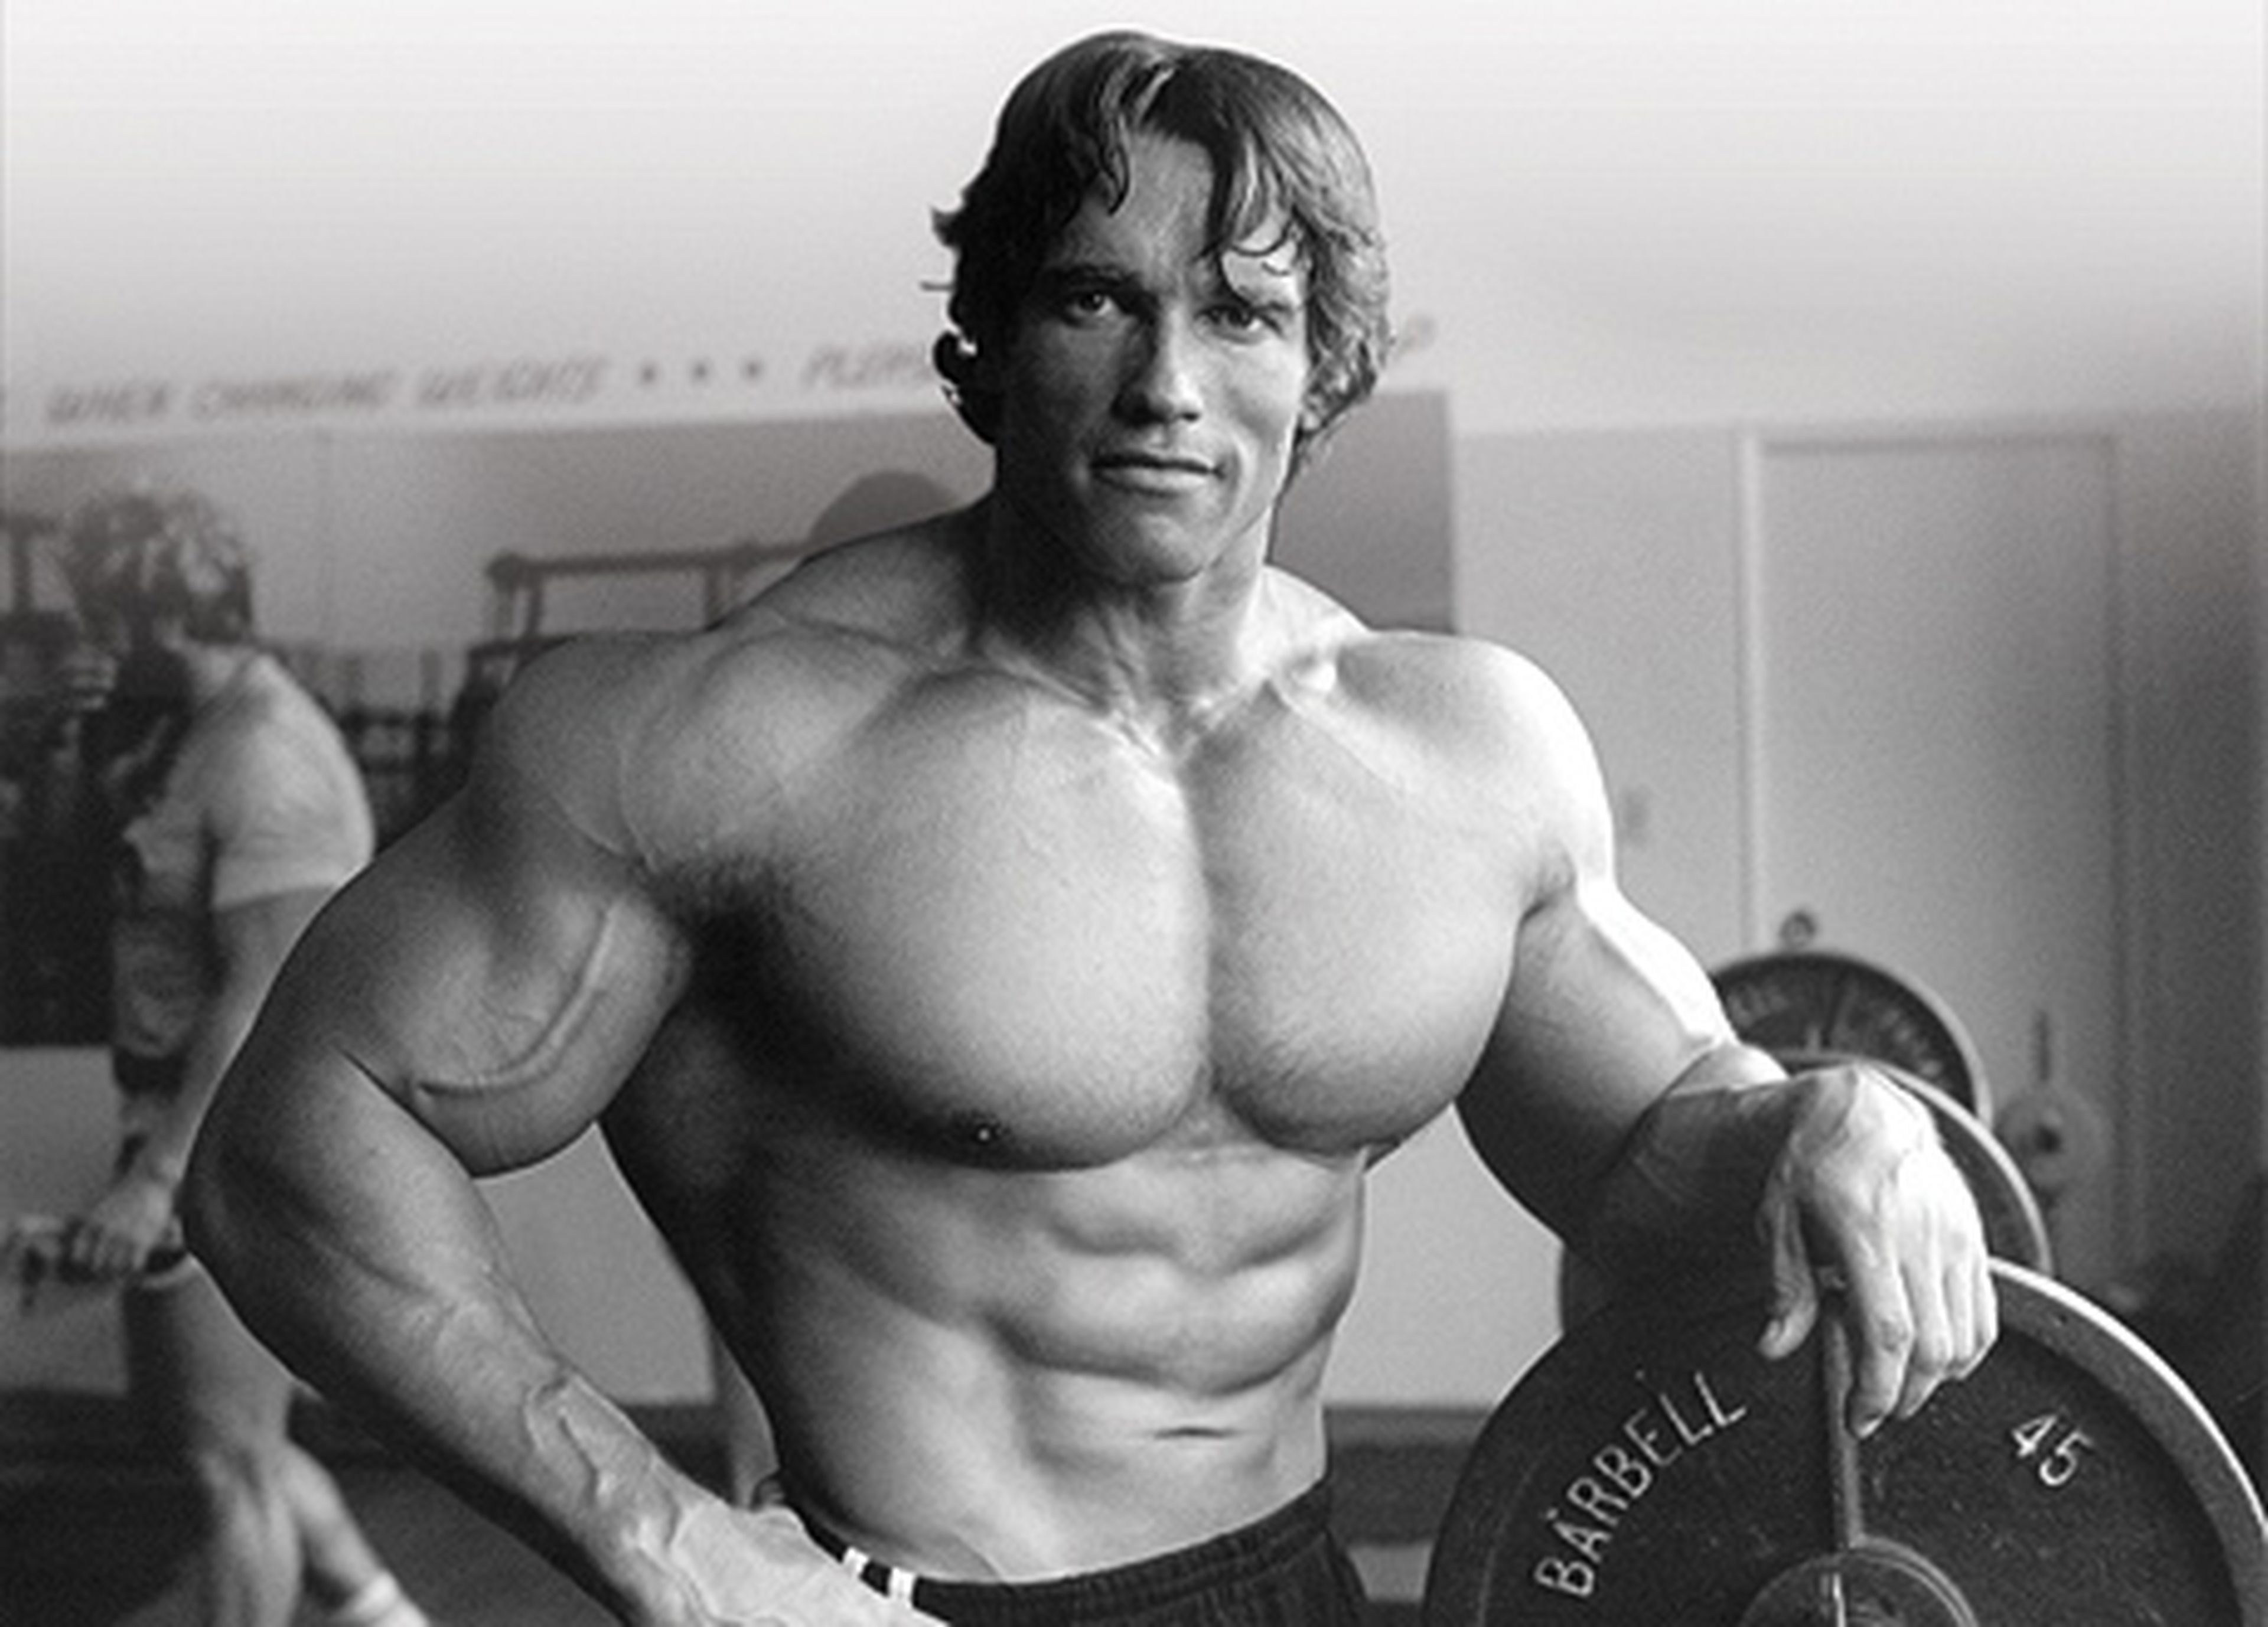 Pump, una serie de fitness producida por Schwarzenegger